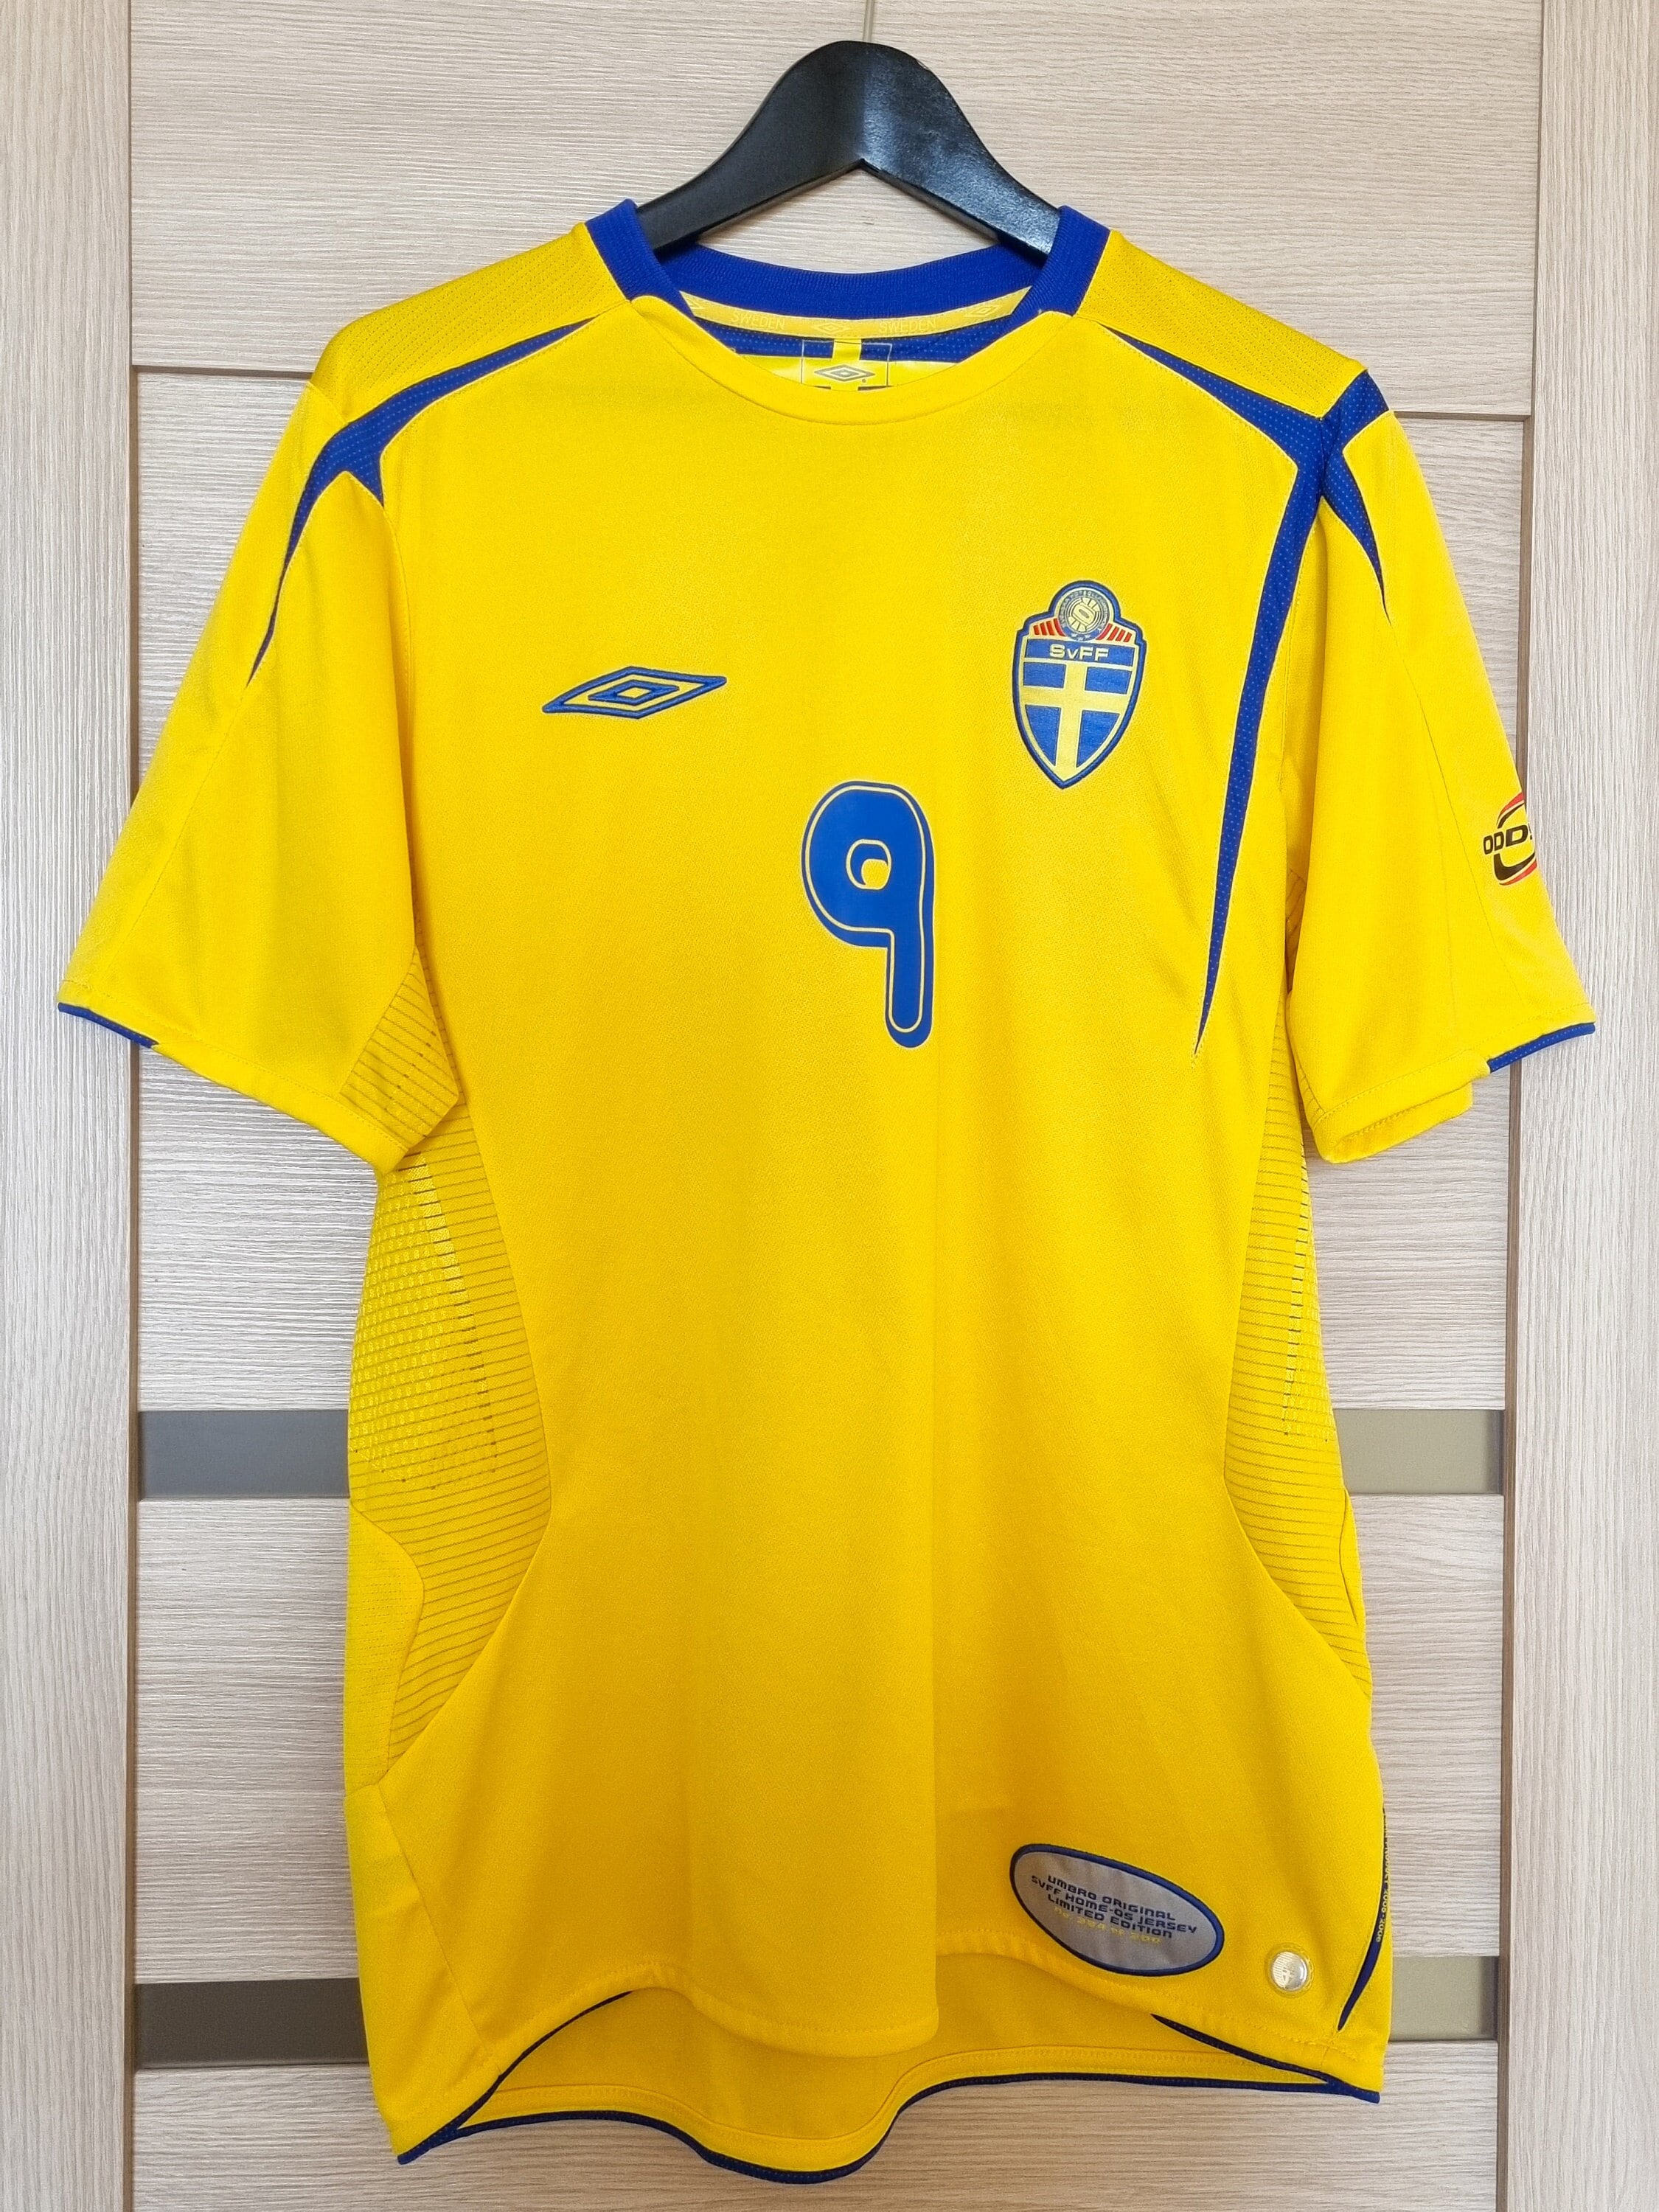 arsenal shirt 2005 06